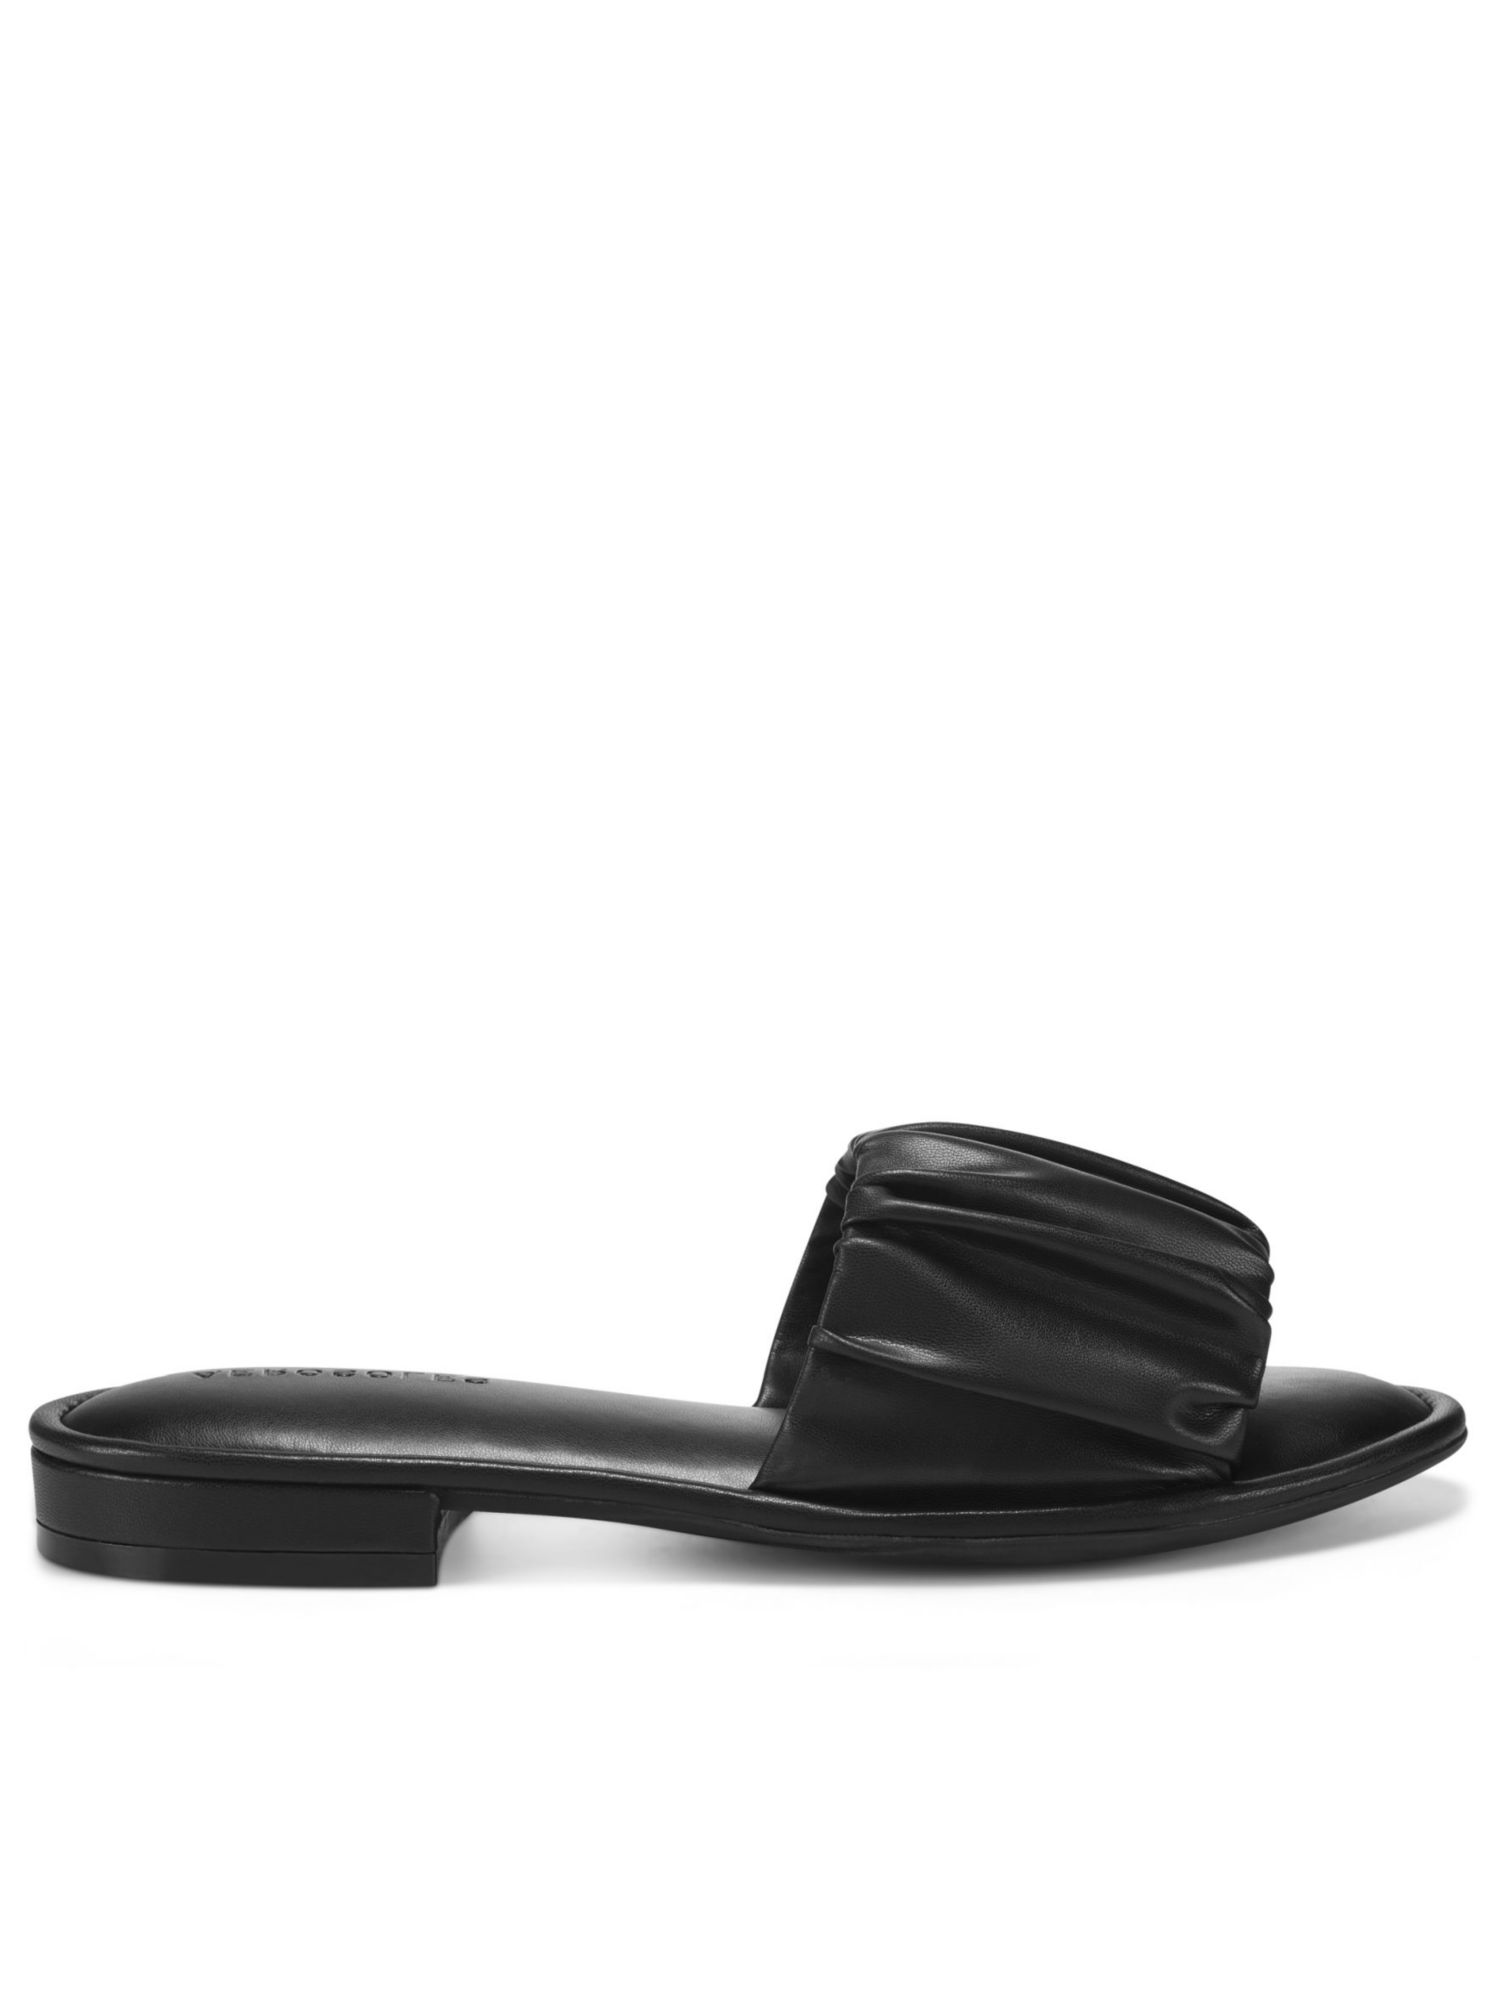 AEROSOLES Womens Black Cushioned Ruched Jamaica Round Toe Block Heel Slip On Slide Sandals Shoes 7 M